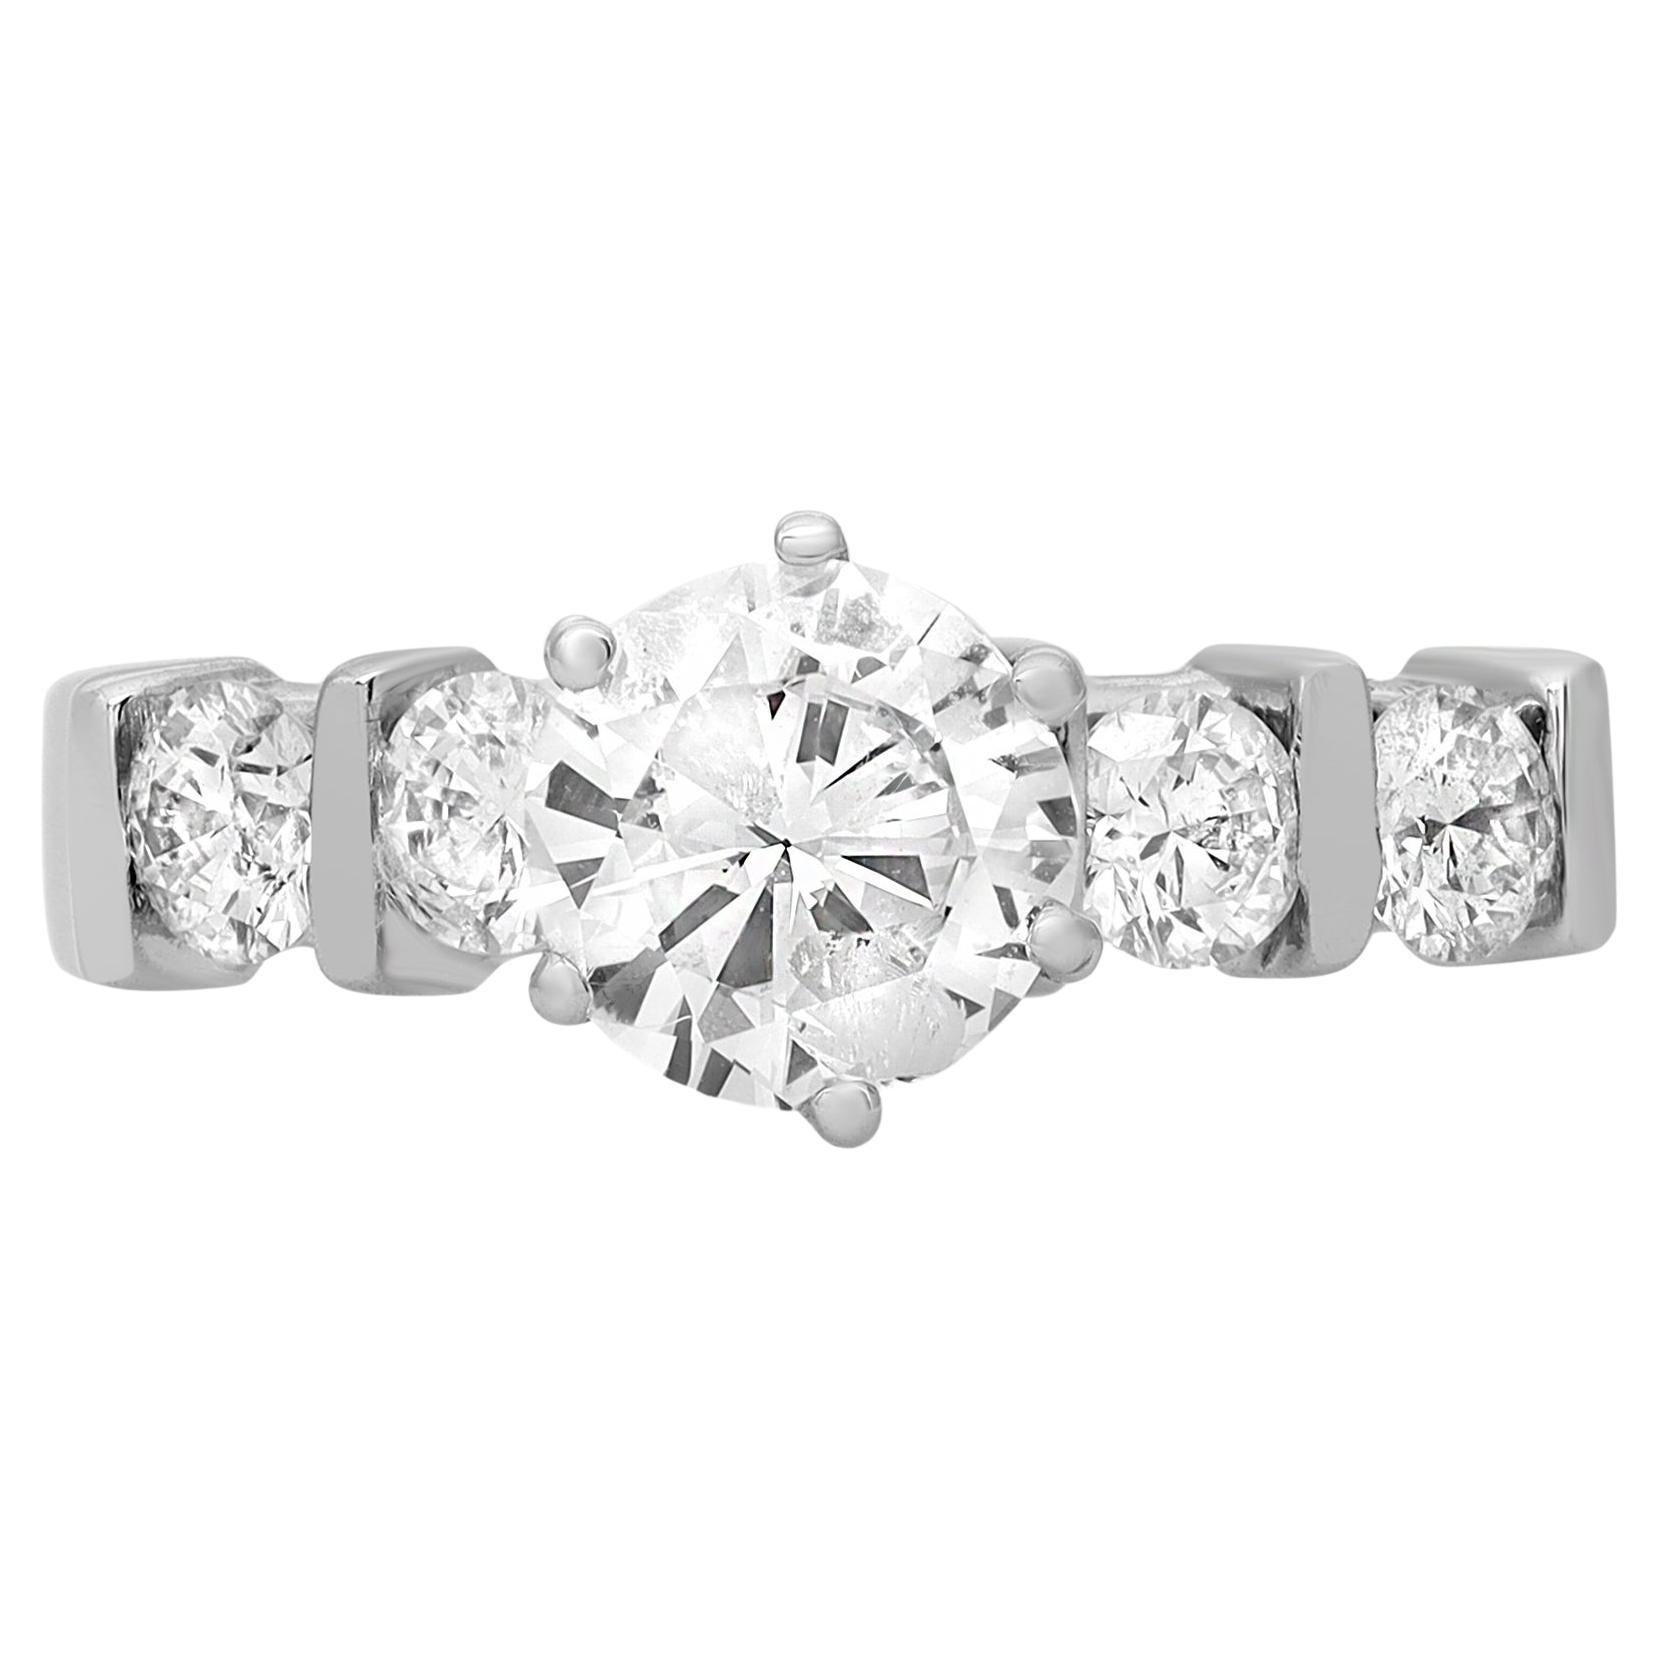 Rachel Koen 1.35Cttw Round Cut Diamond Engagement Ring 14K White Gold Size 5.75